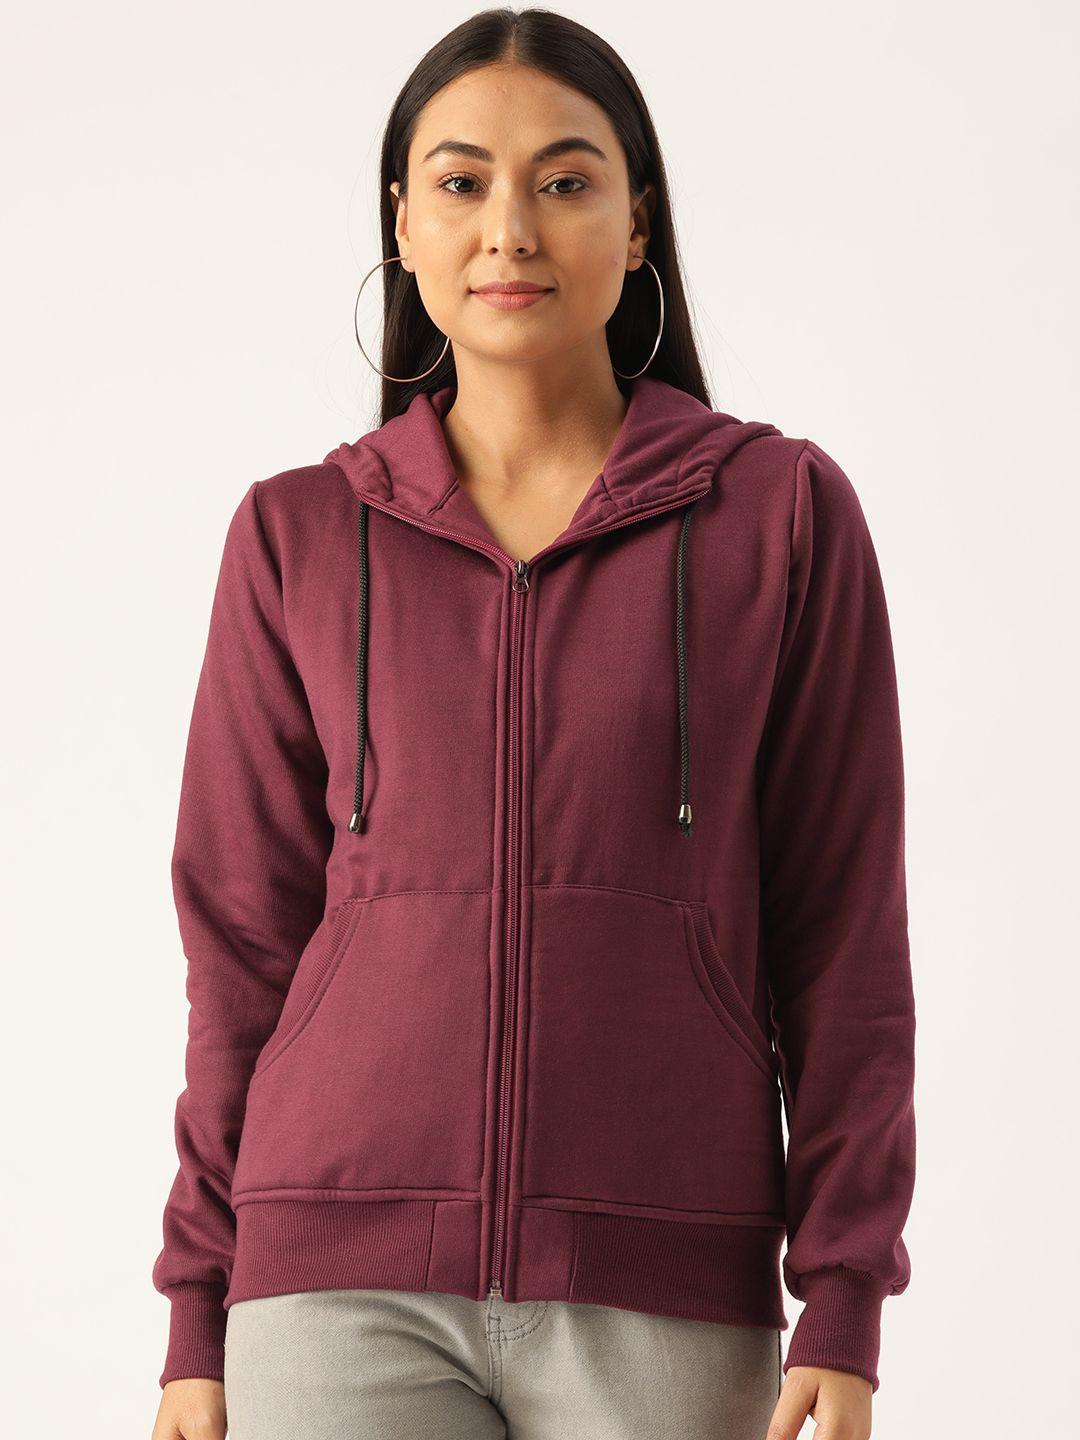 alsace lorraine paris women burgundy solid hooded sweatshirt